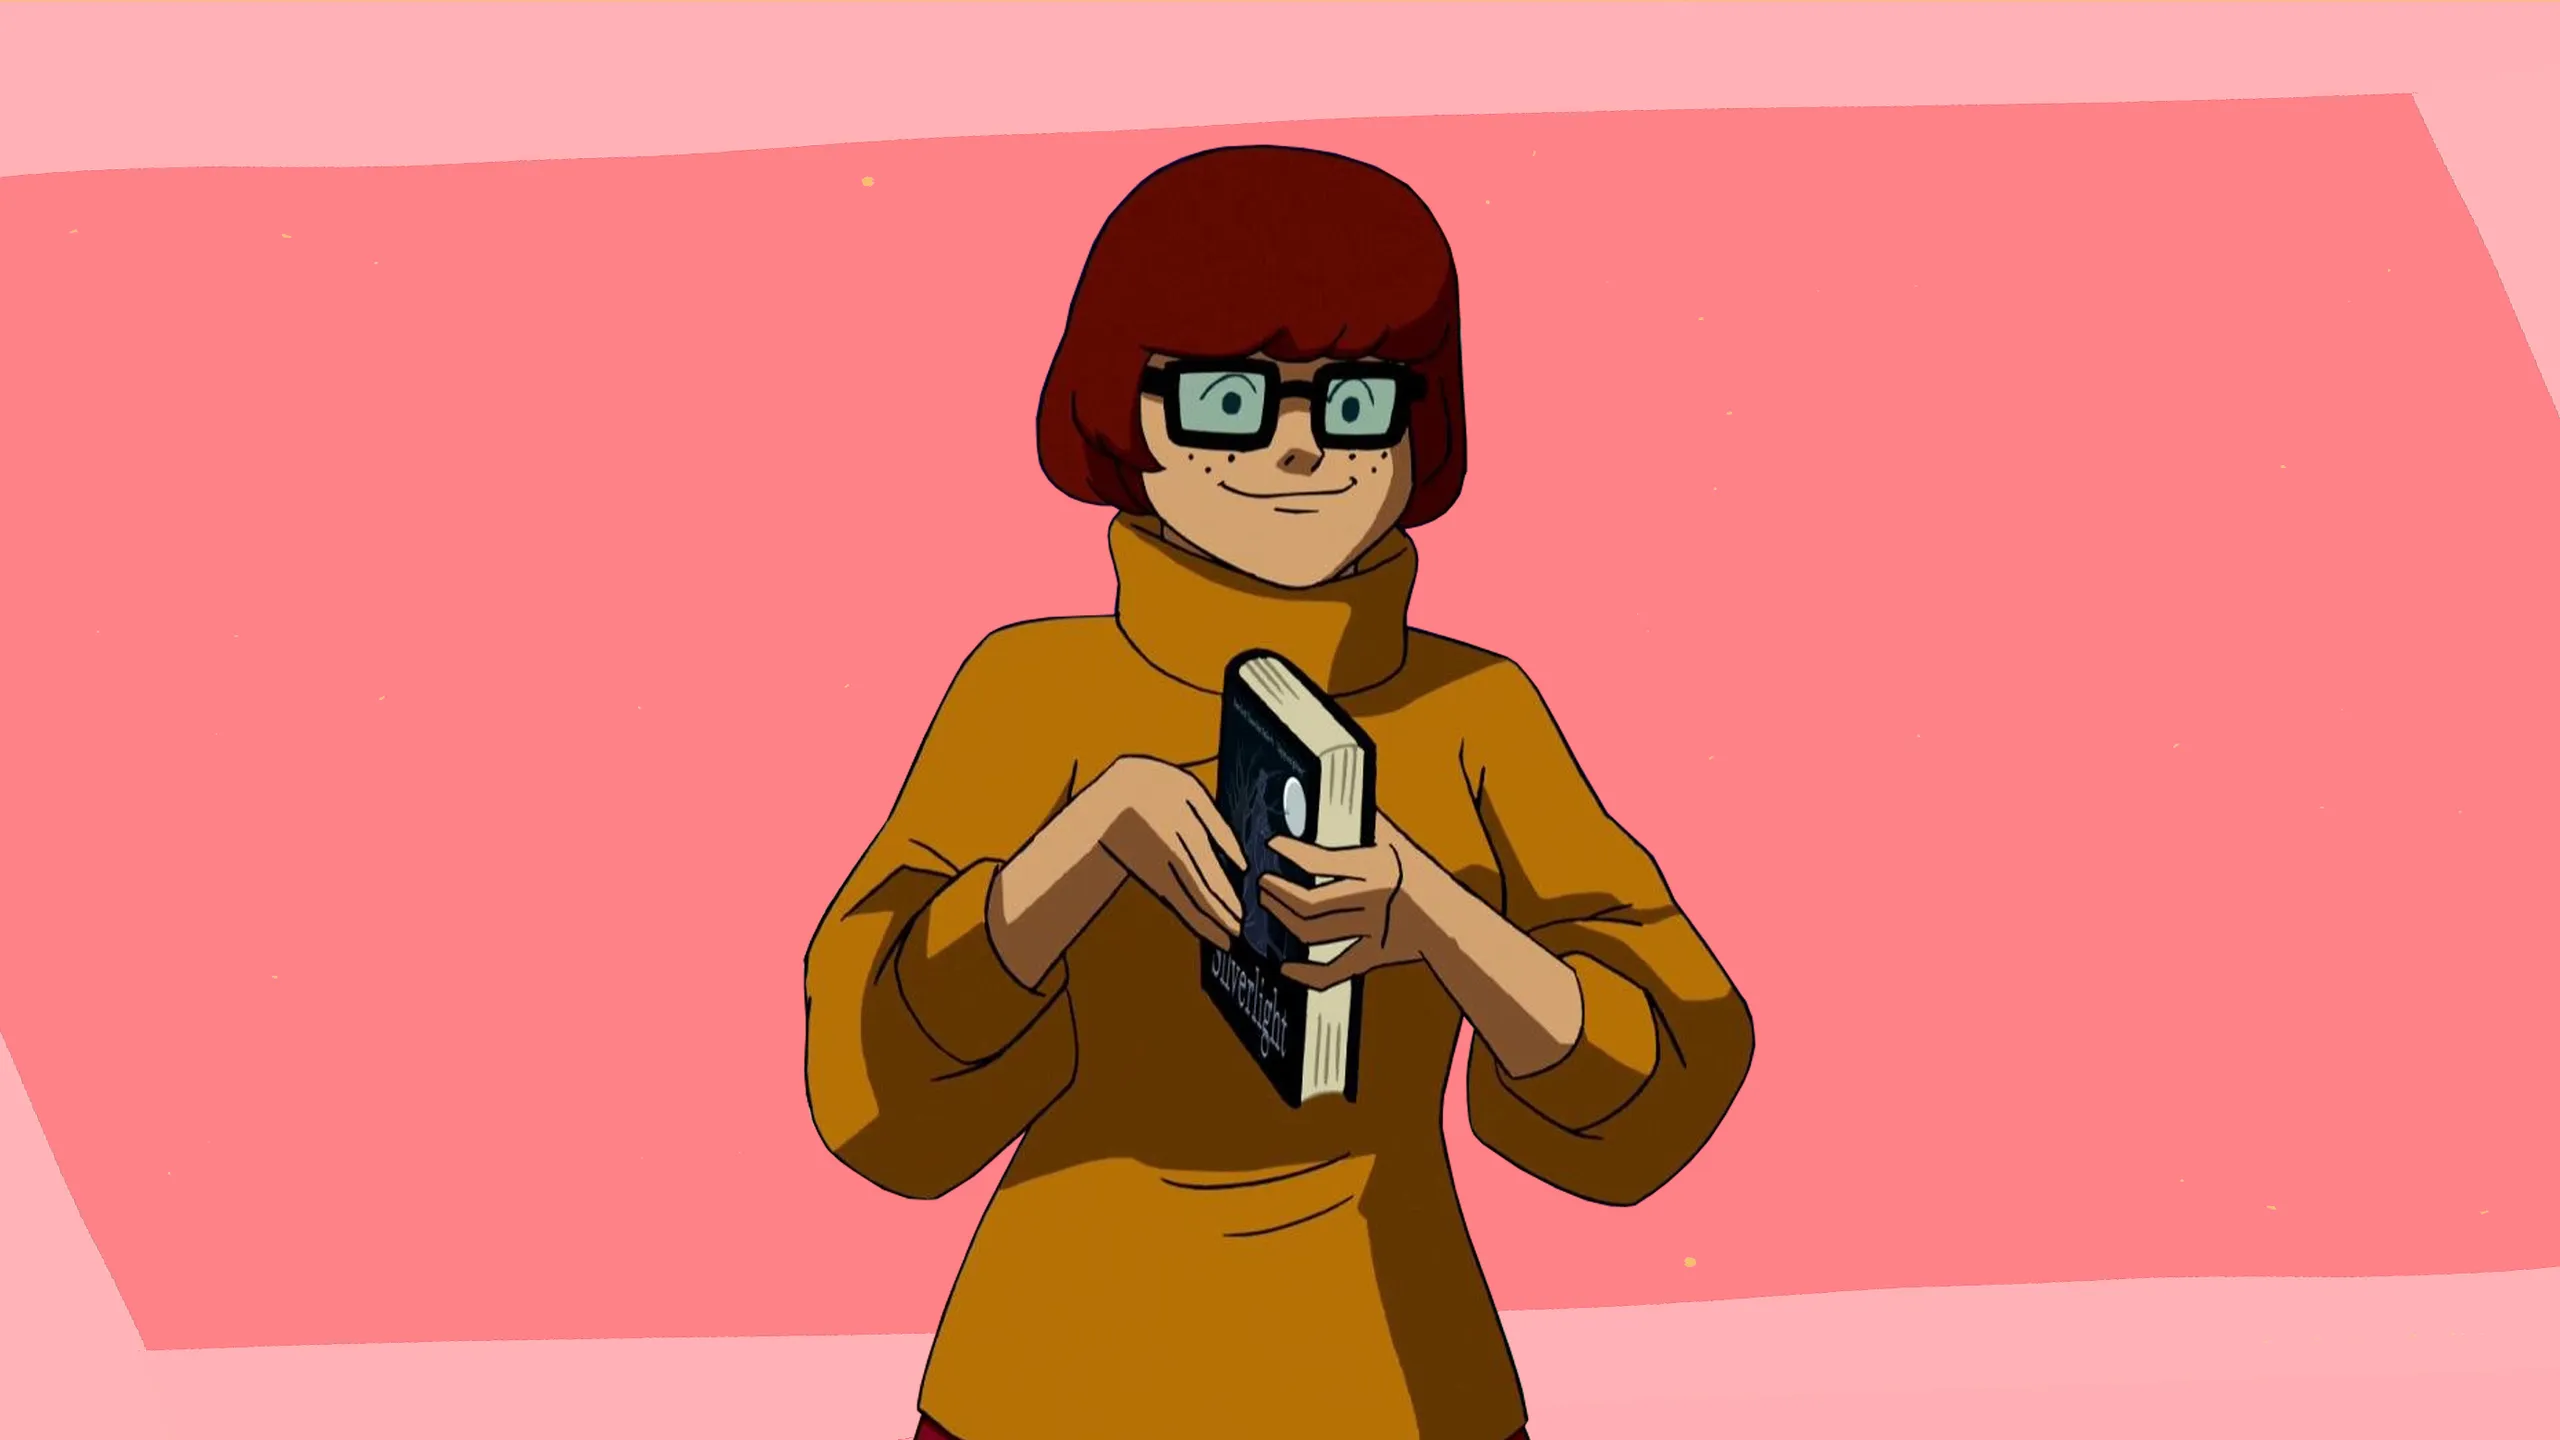 Velma Dinkley (Velma TV series incarnation) - Loathsome Characters Wiki